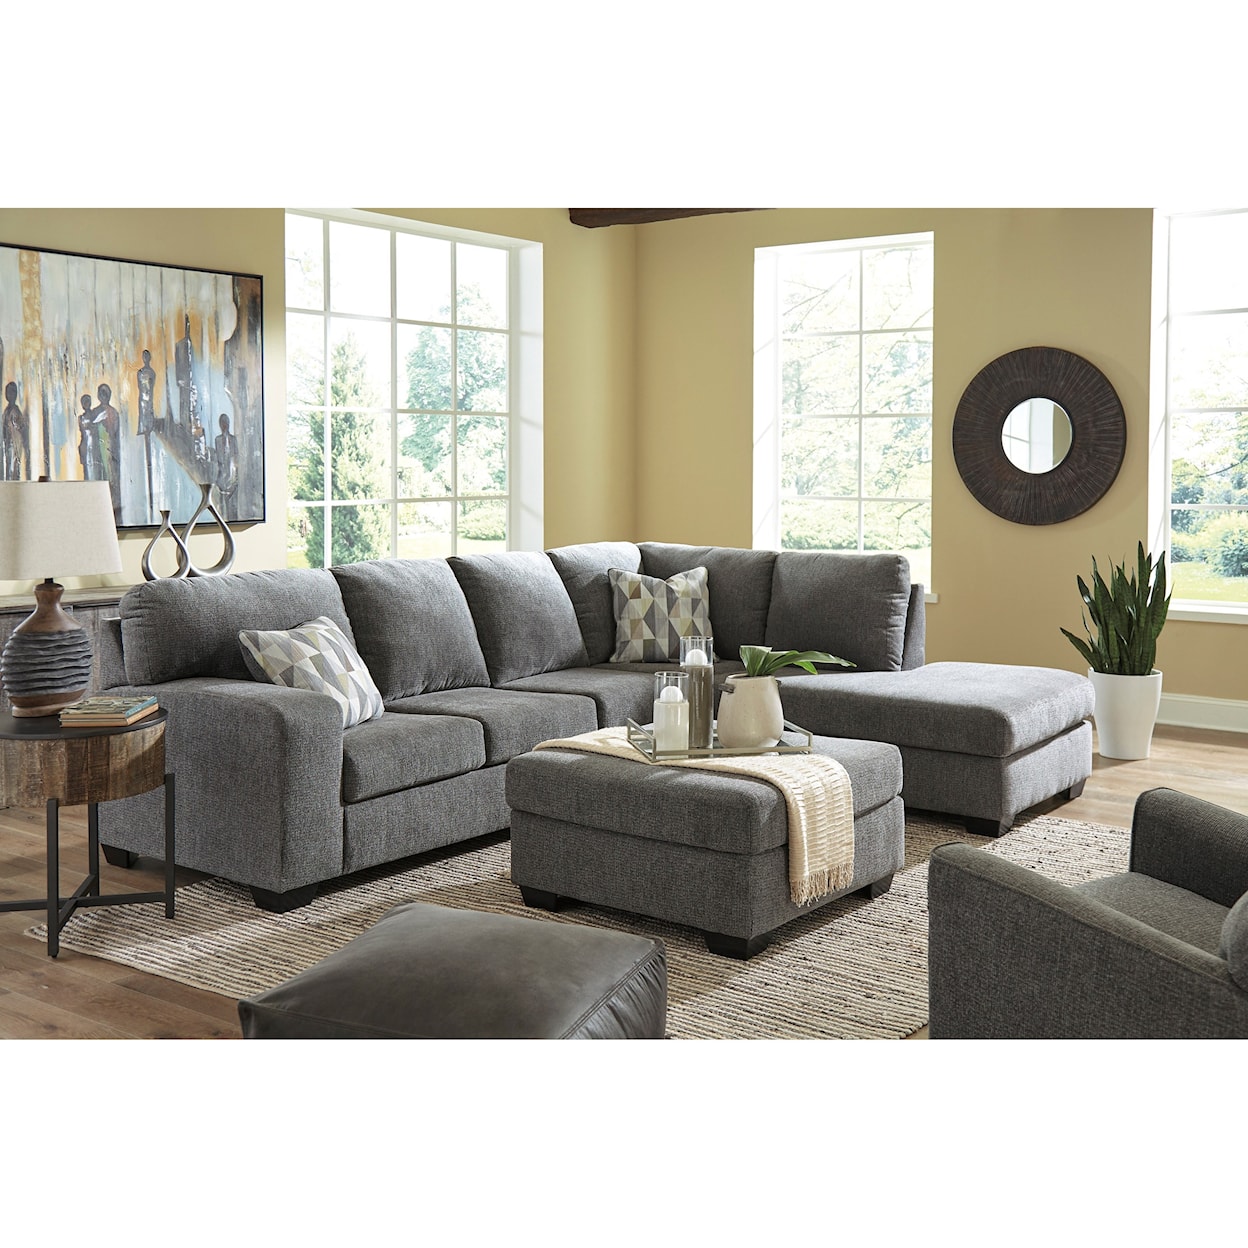 Ashley Furniture Benchcraft Dalhart Living Room Group